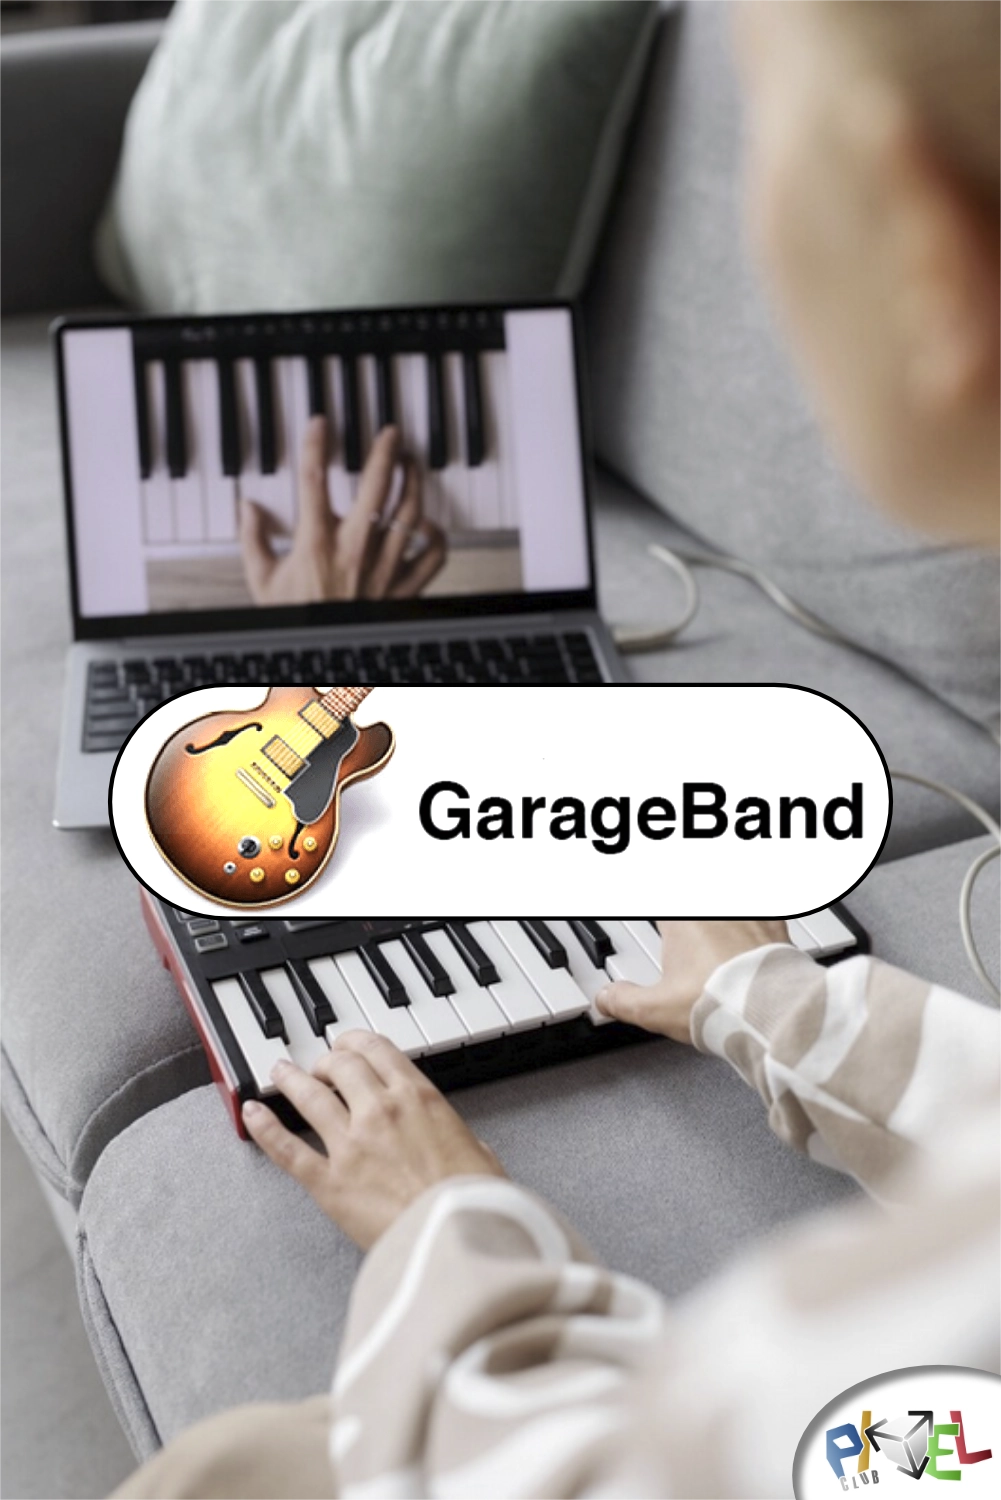 Garage Band